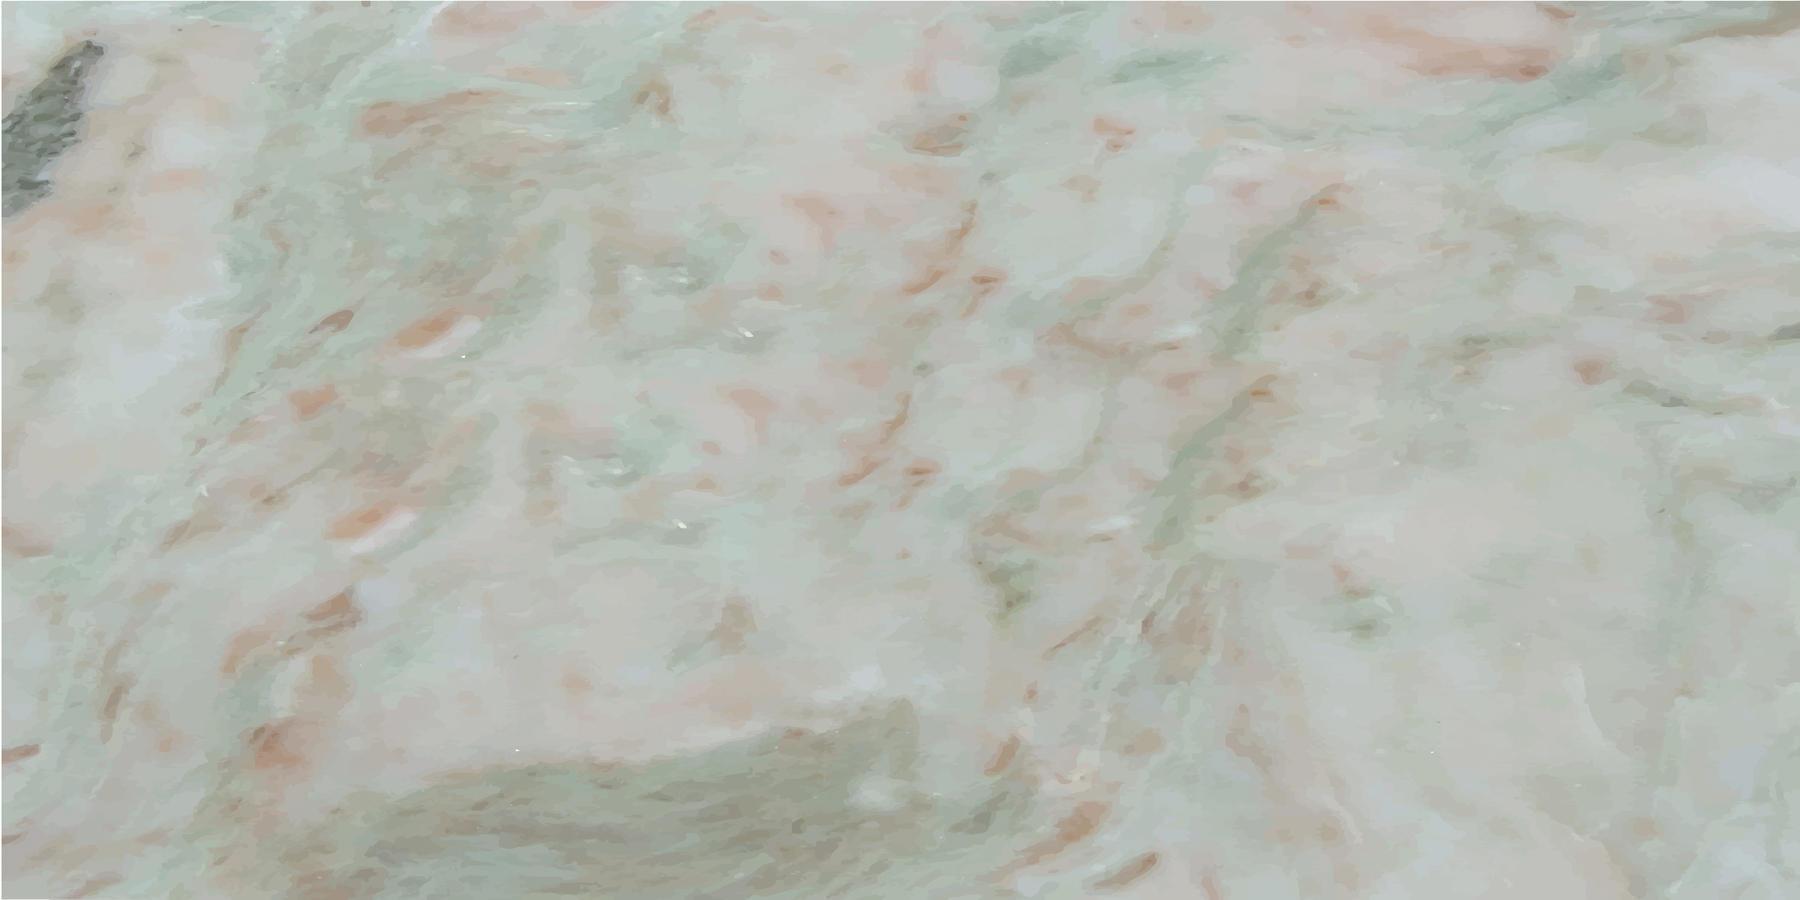 natursten konsistens marmor bakgrund vektor